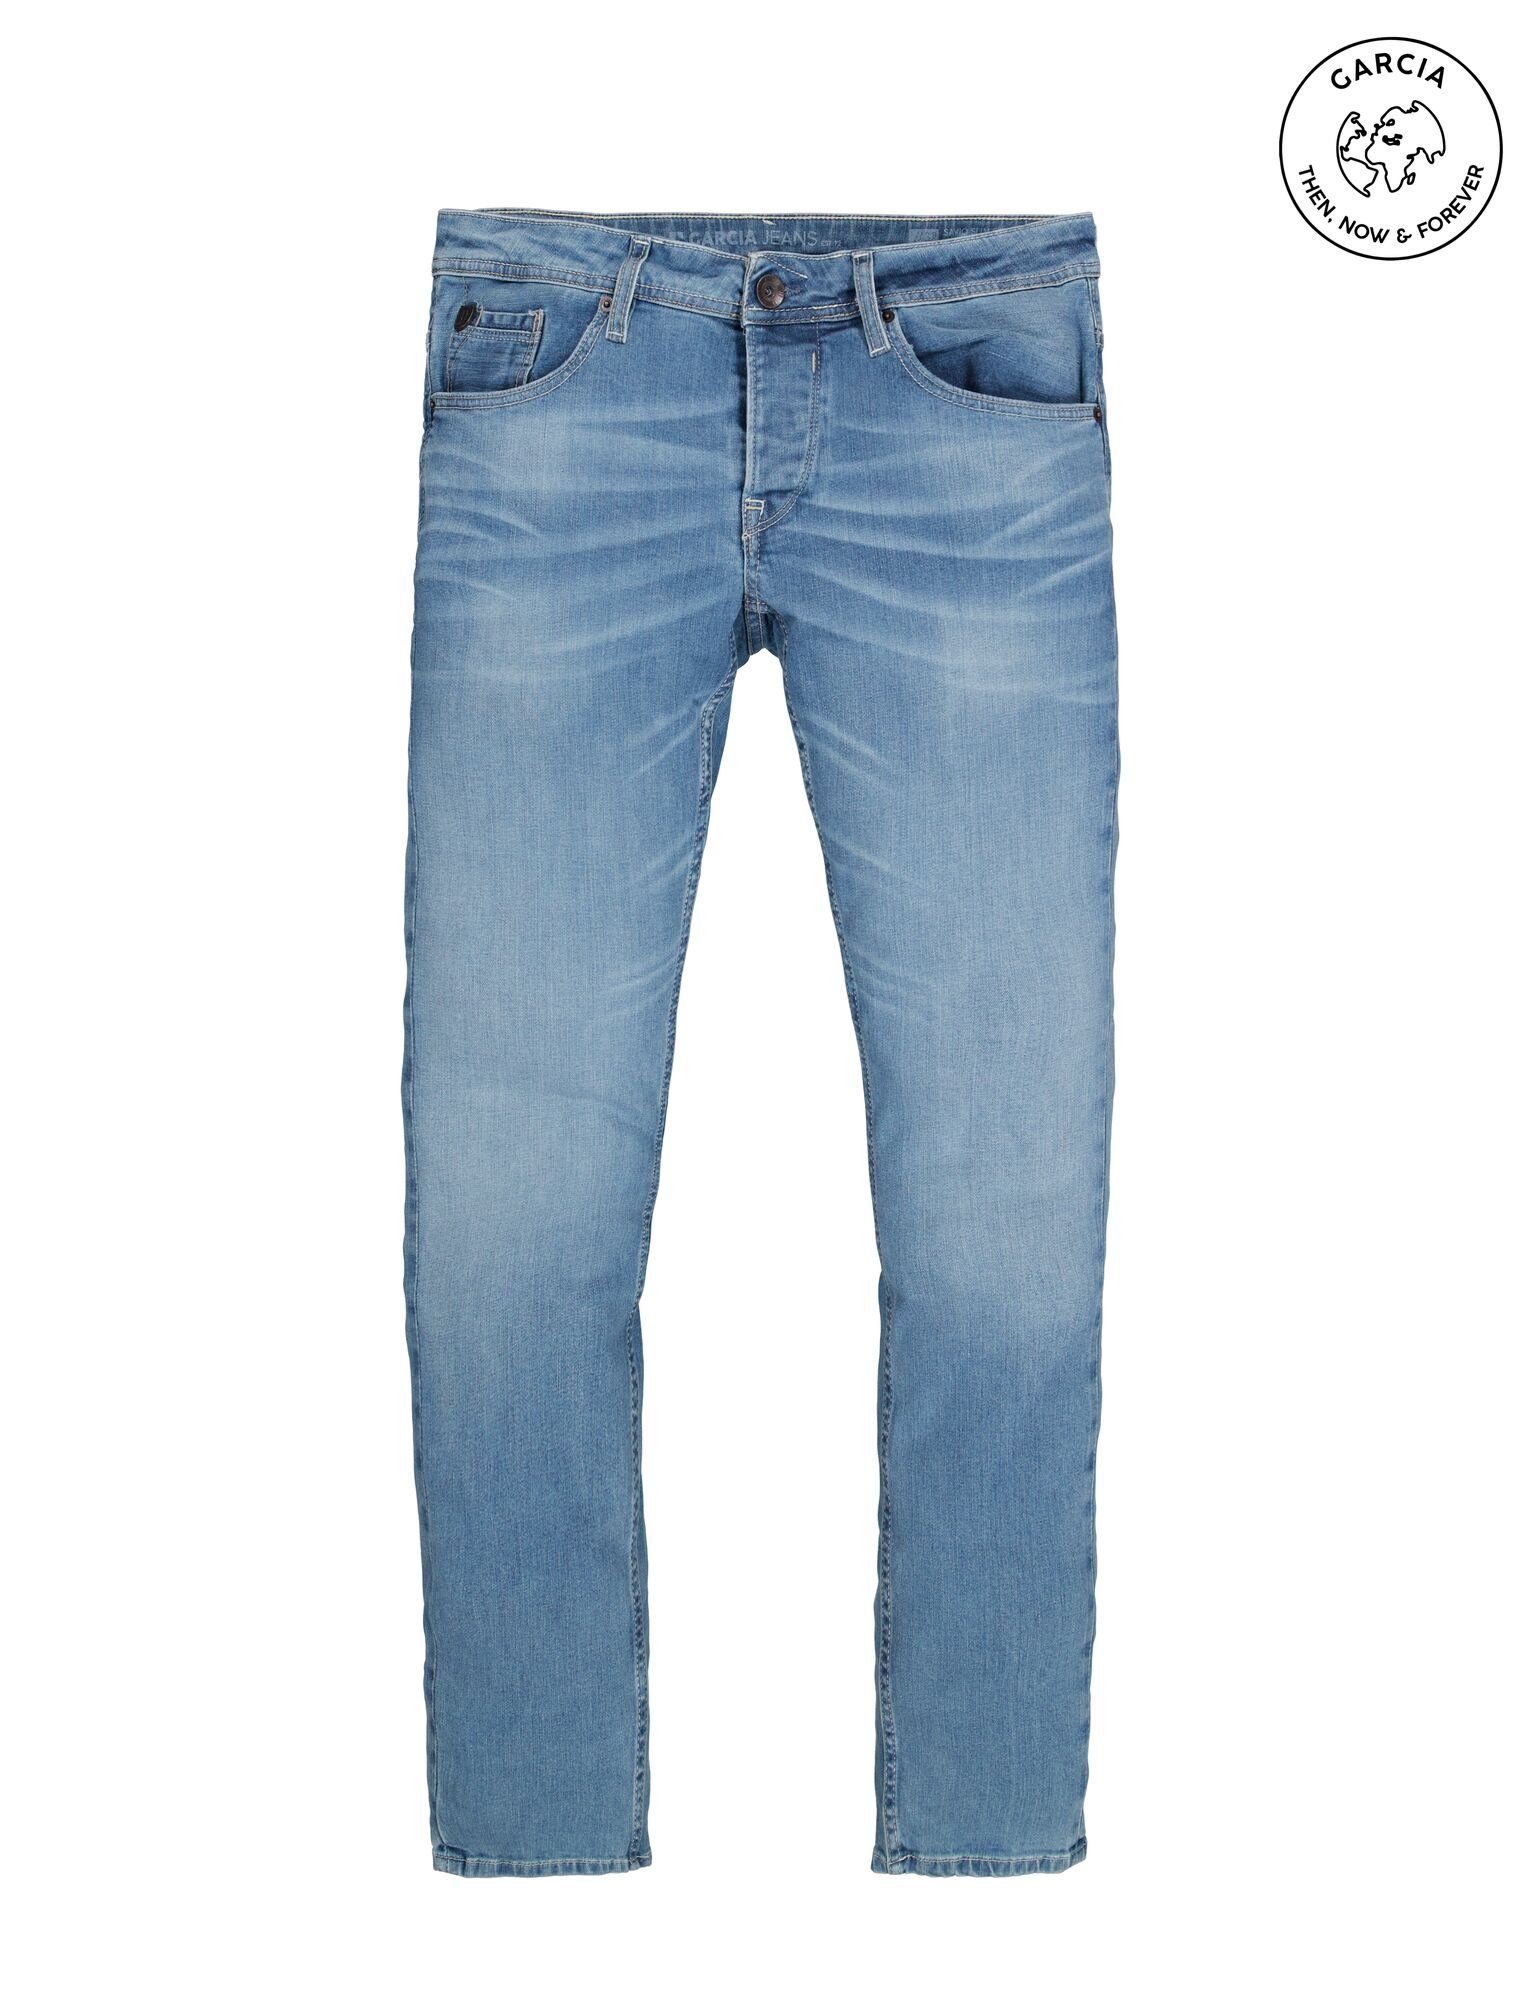 GARCIA JEANS 5-Pocket-Jeans GARCIA SAVIO denim blue light used